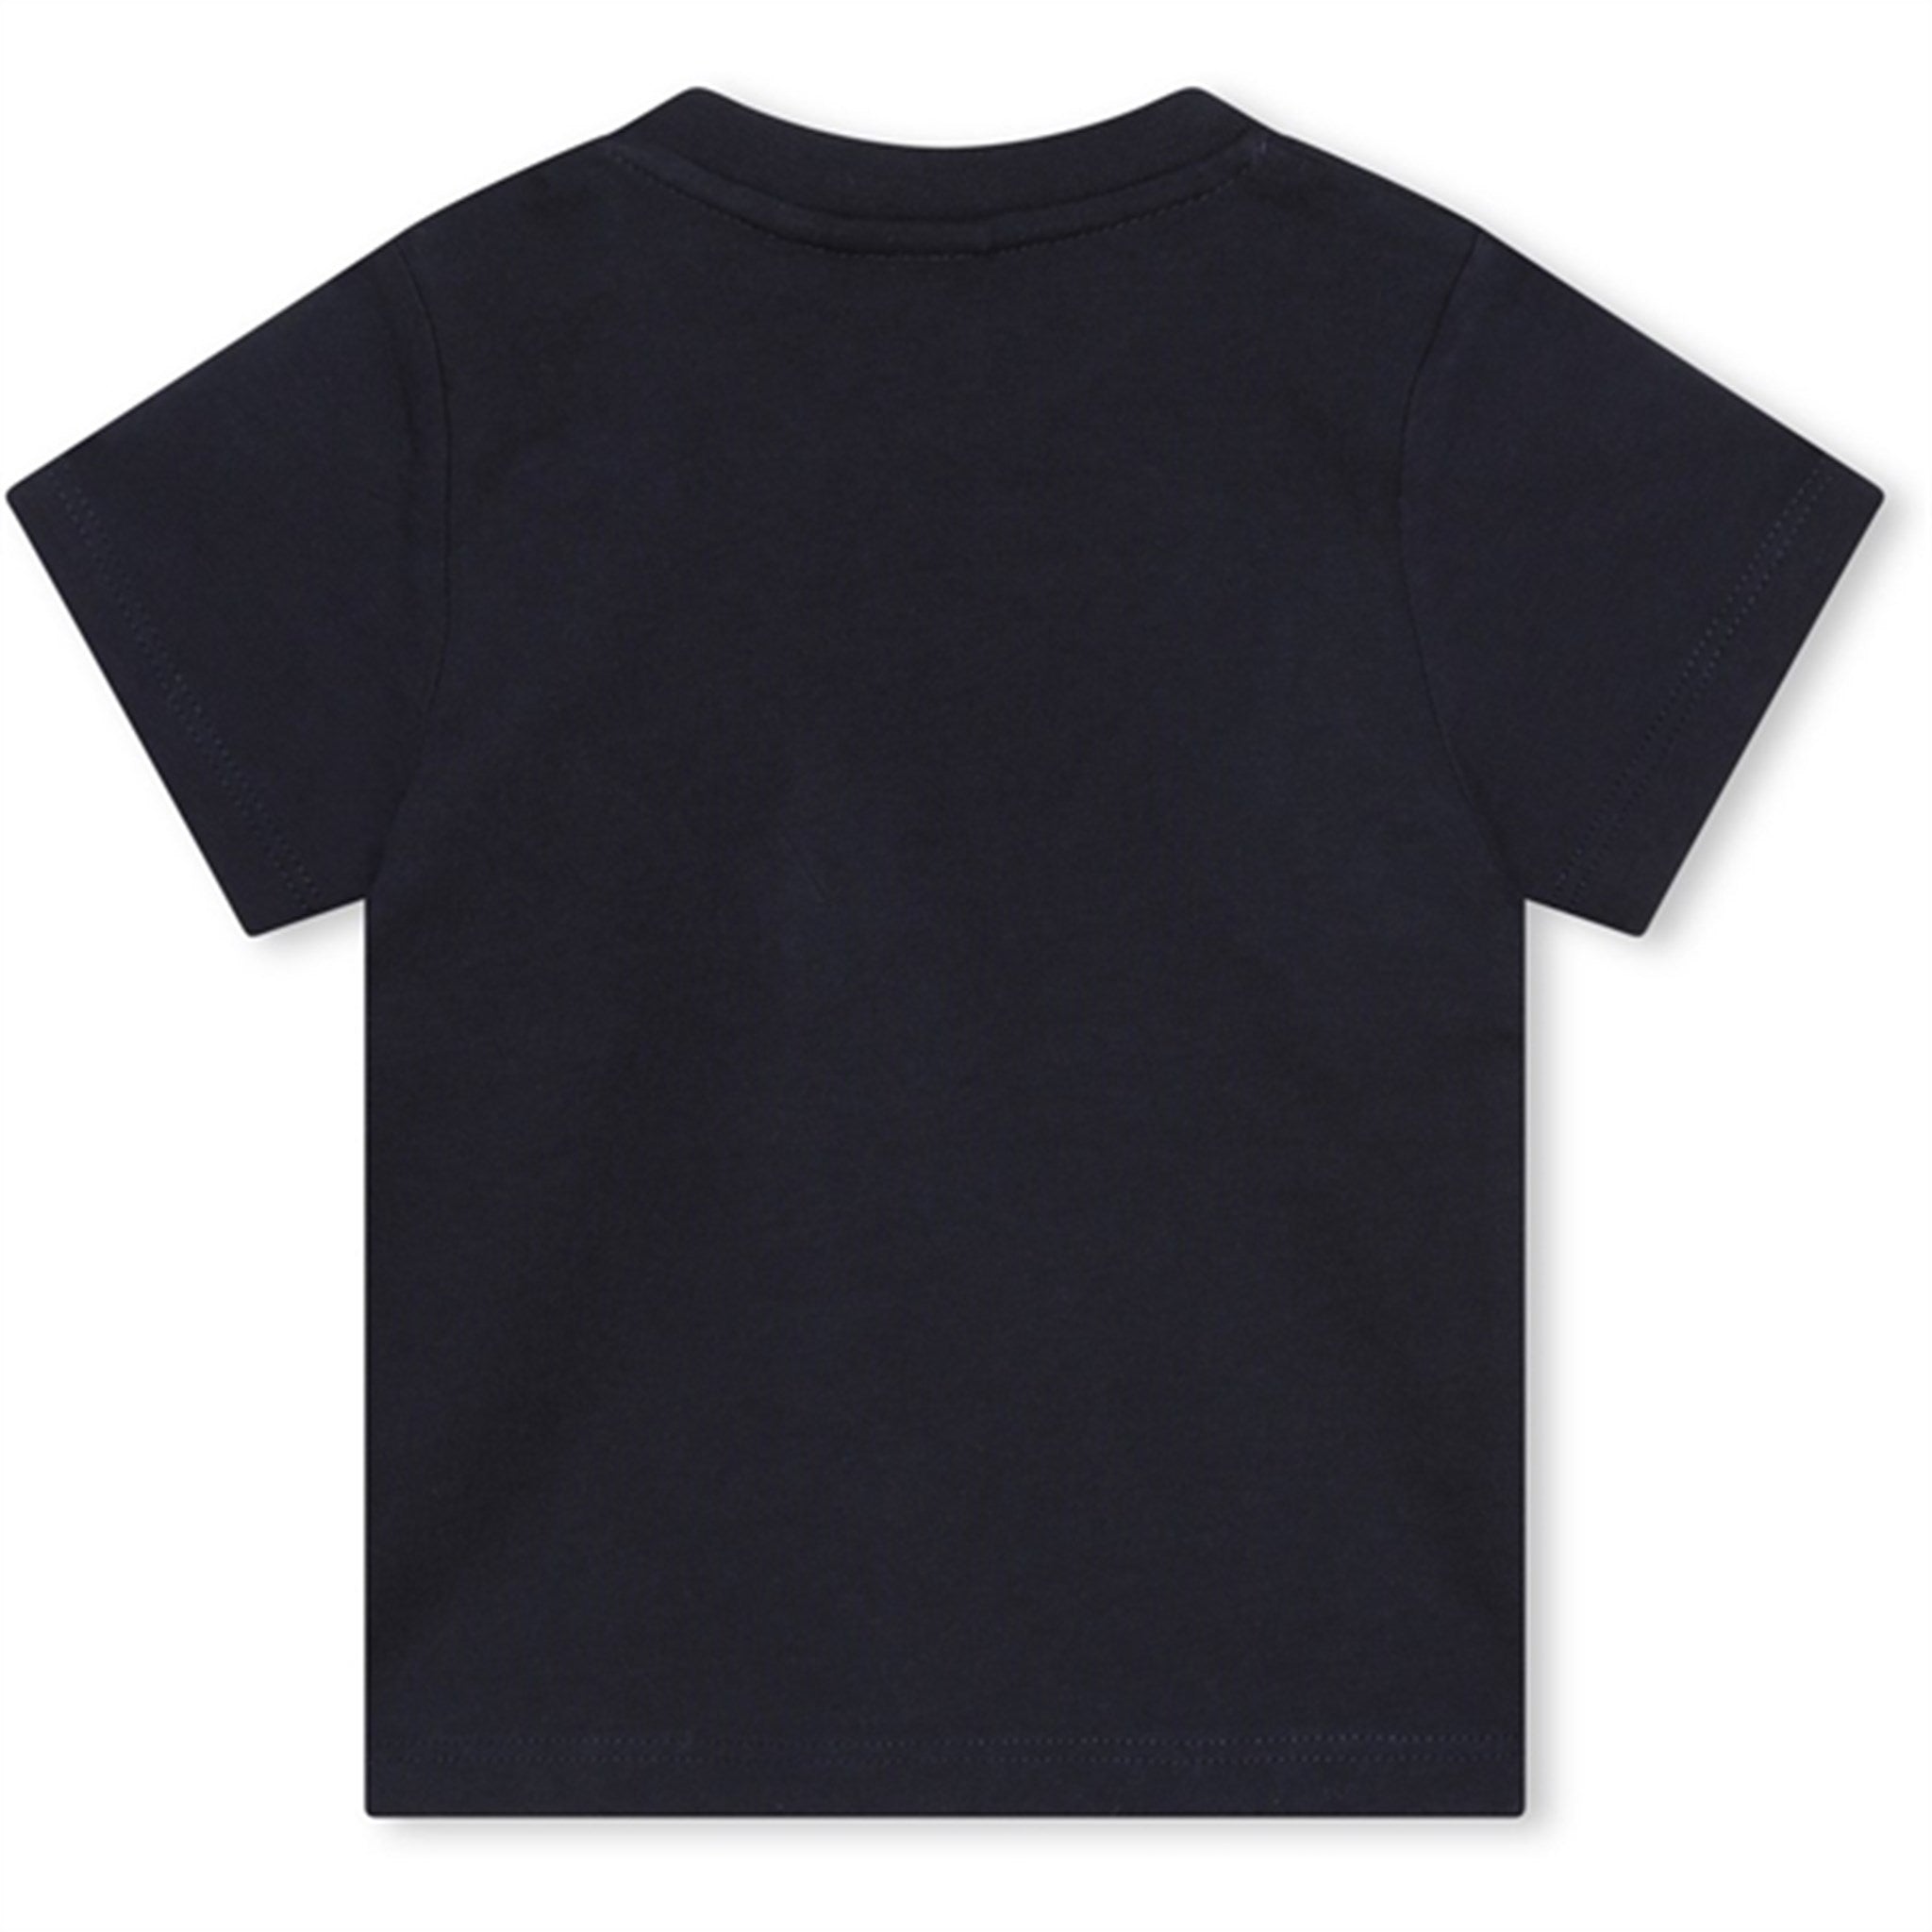 Hugo Boss Bebis T-shirt Navy 2